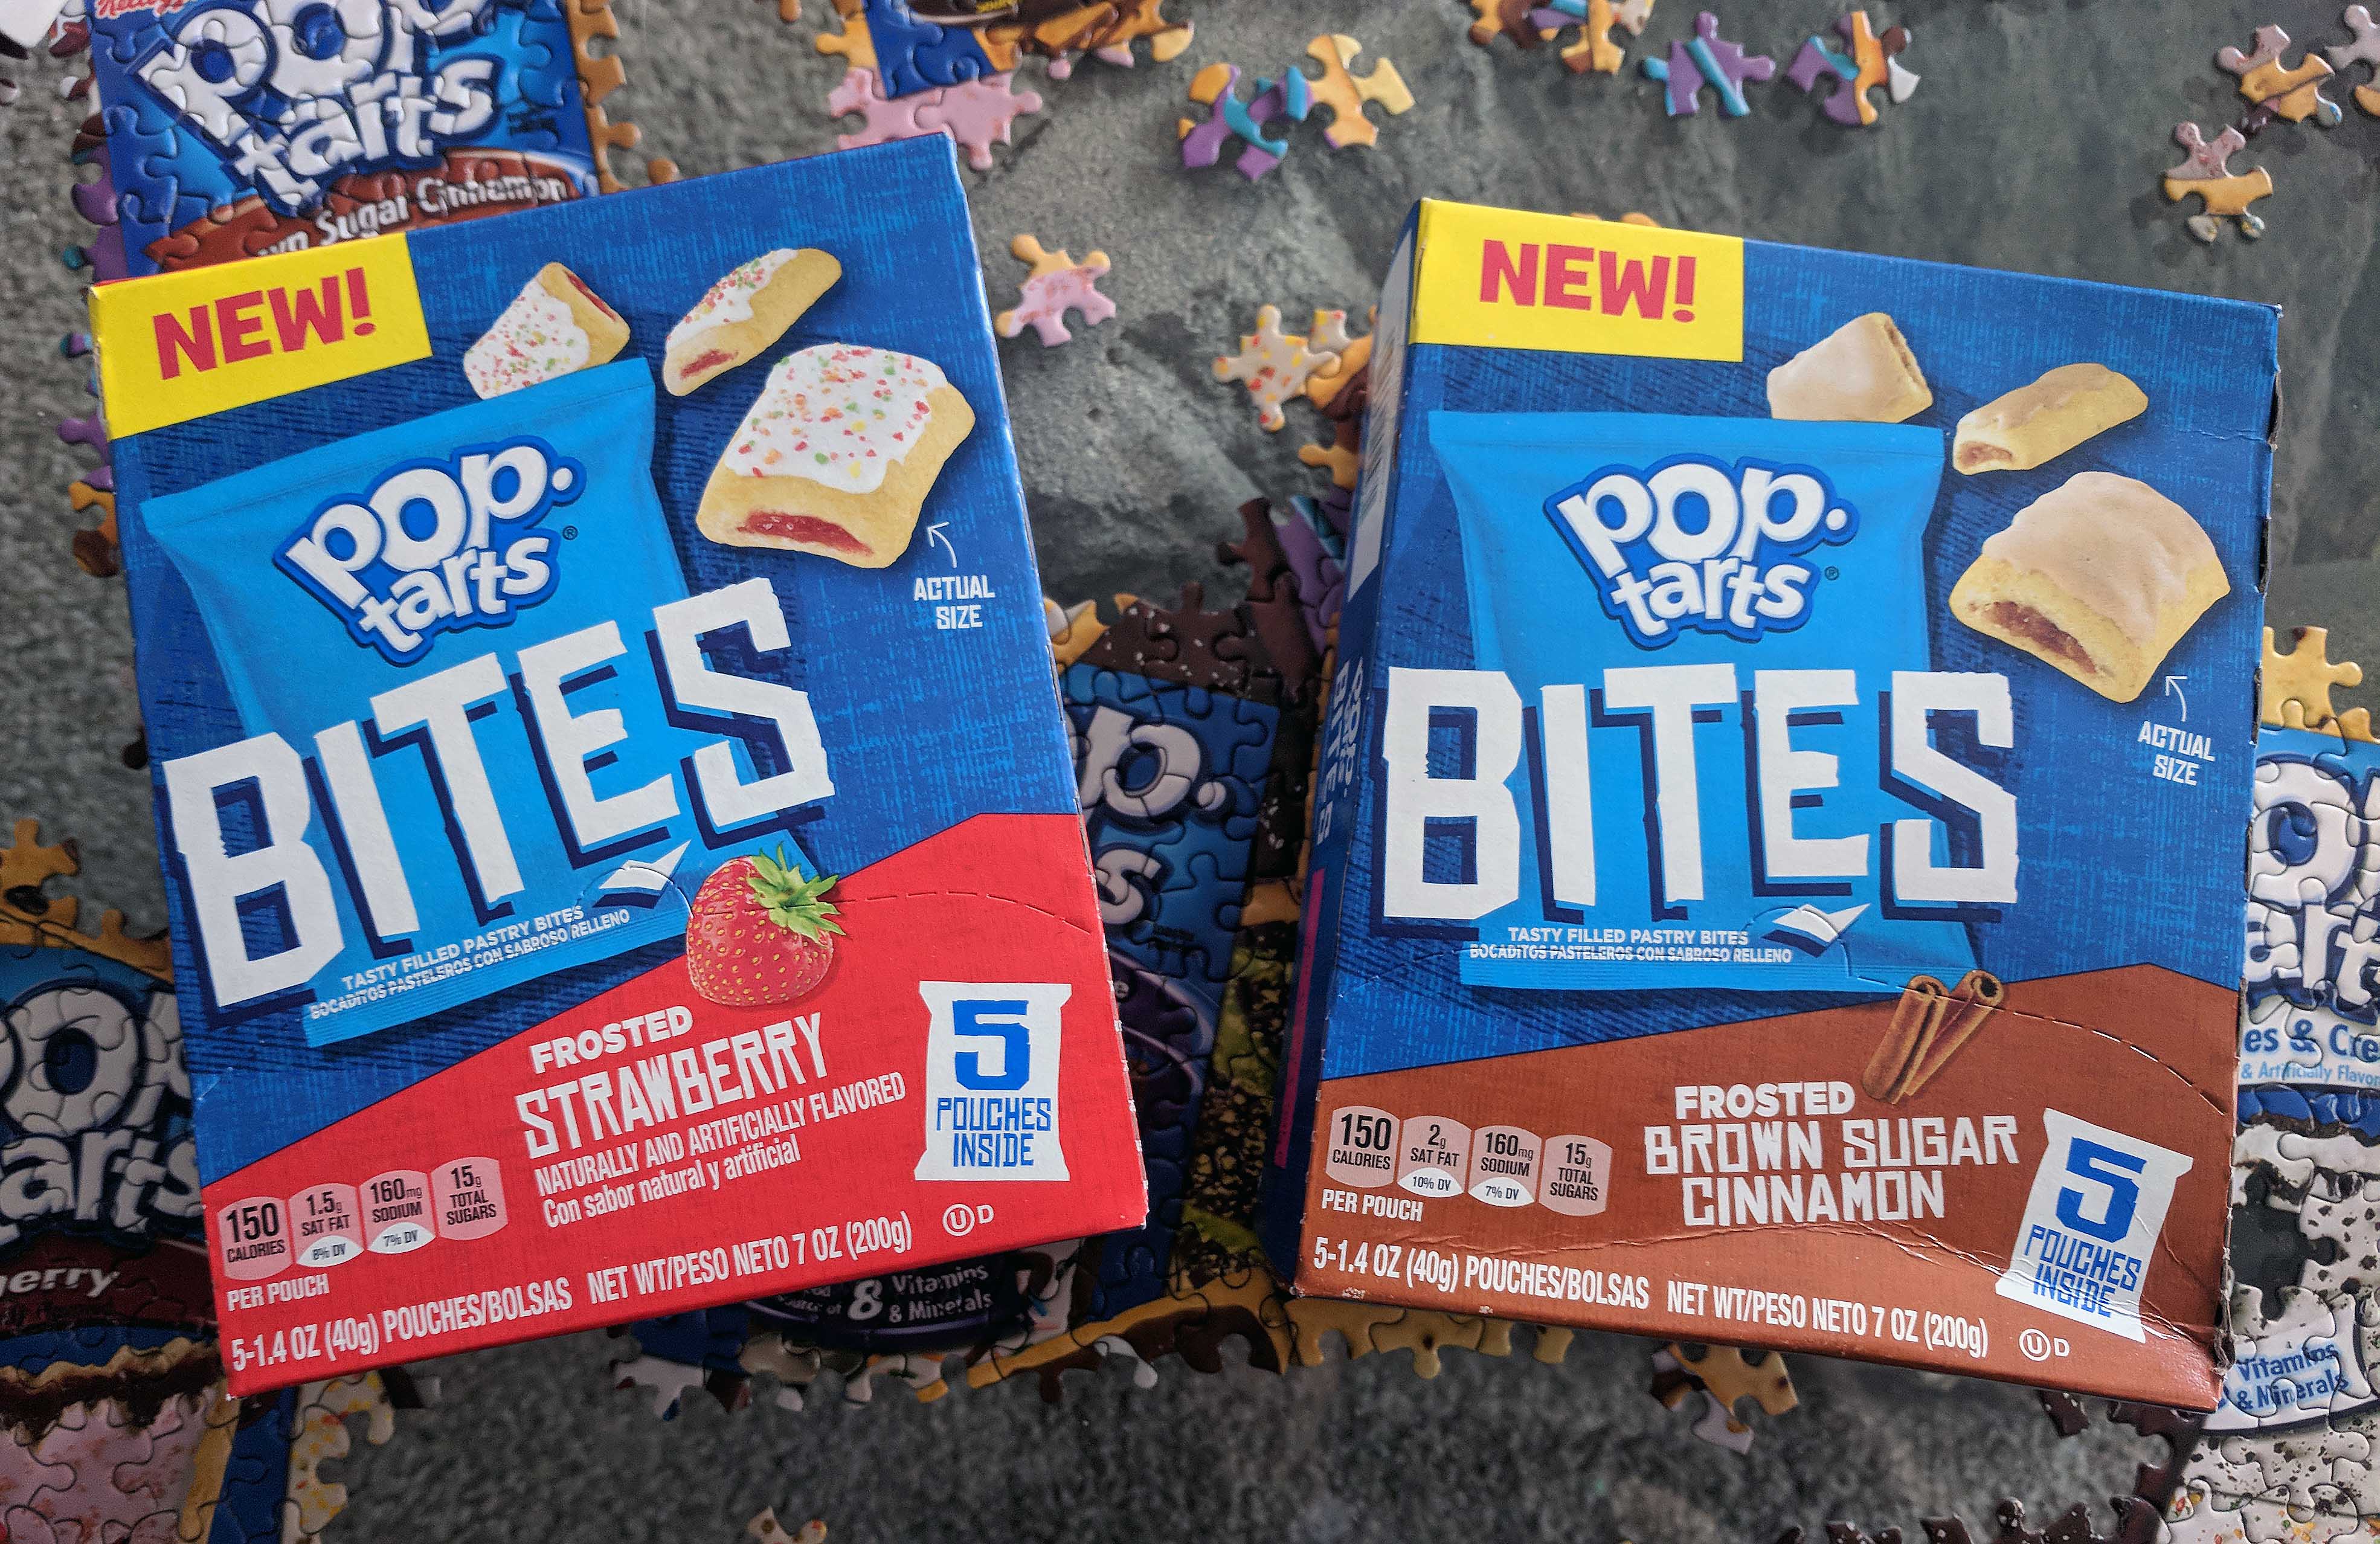 Kellogg's Pop-Tarts Bites Review - Strawberry & Brown Sugar Cinnamon Boxes 